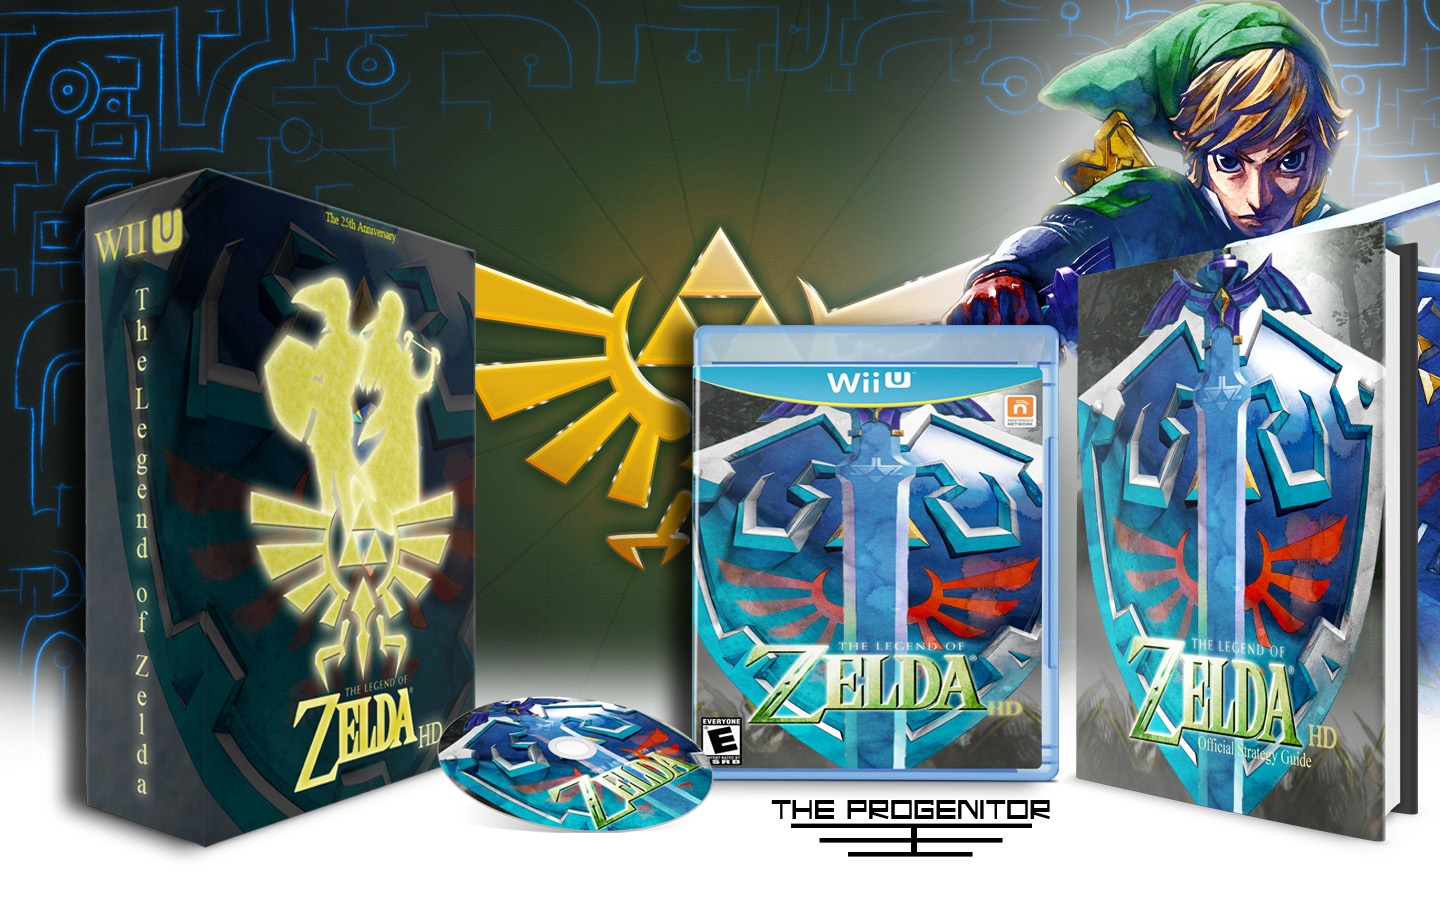 The Legend of Zelda HD box cover